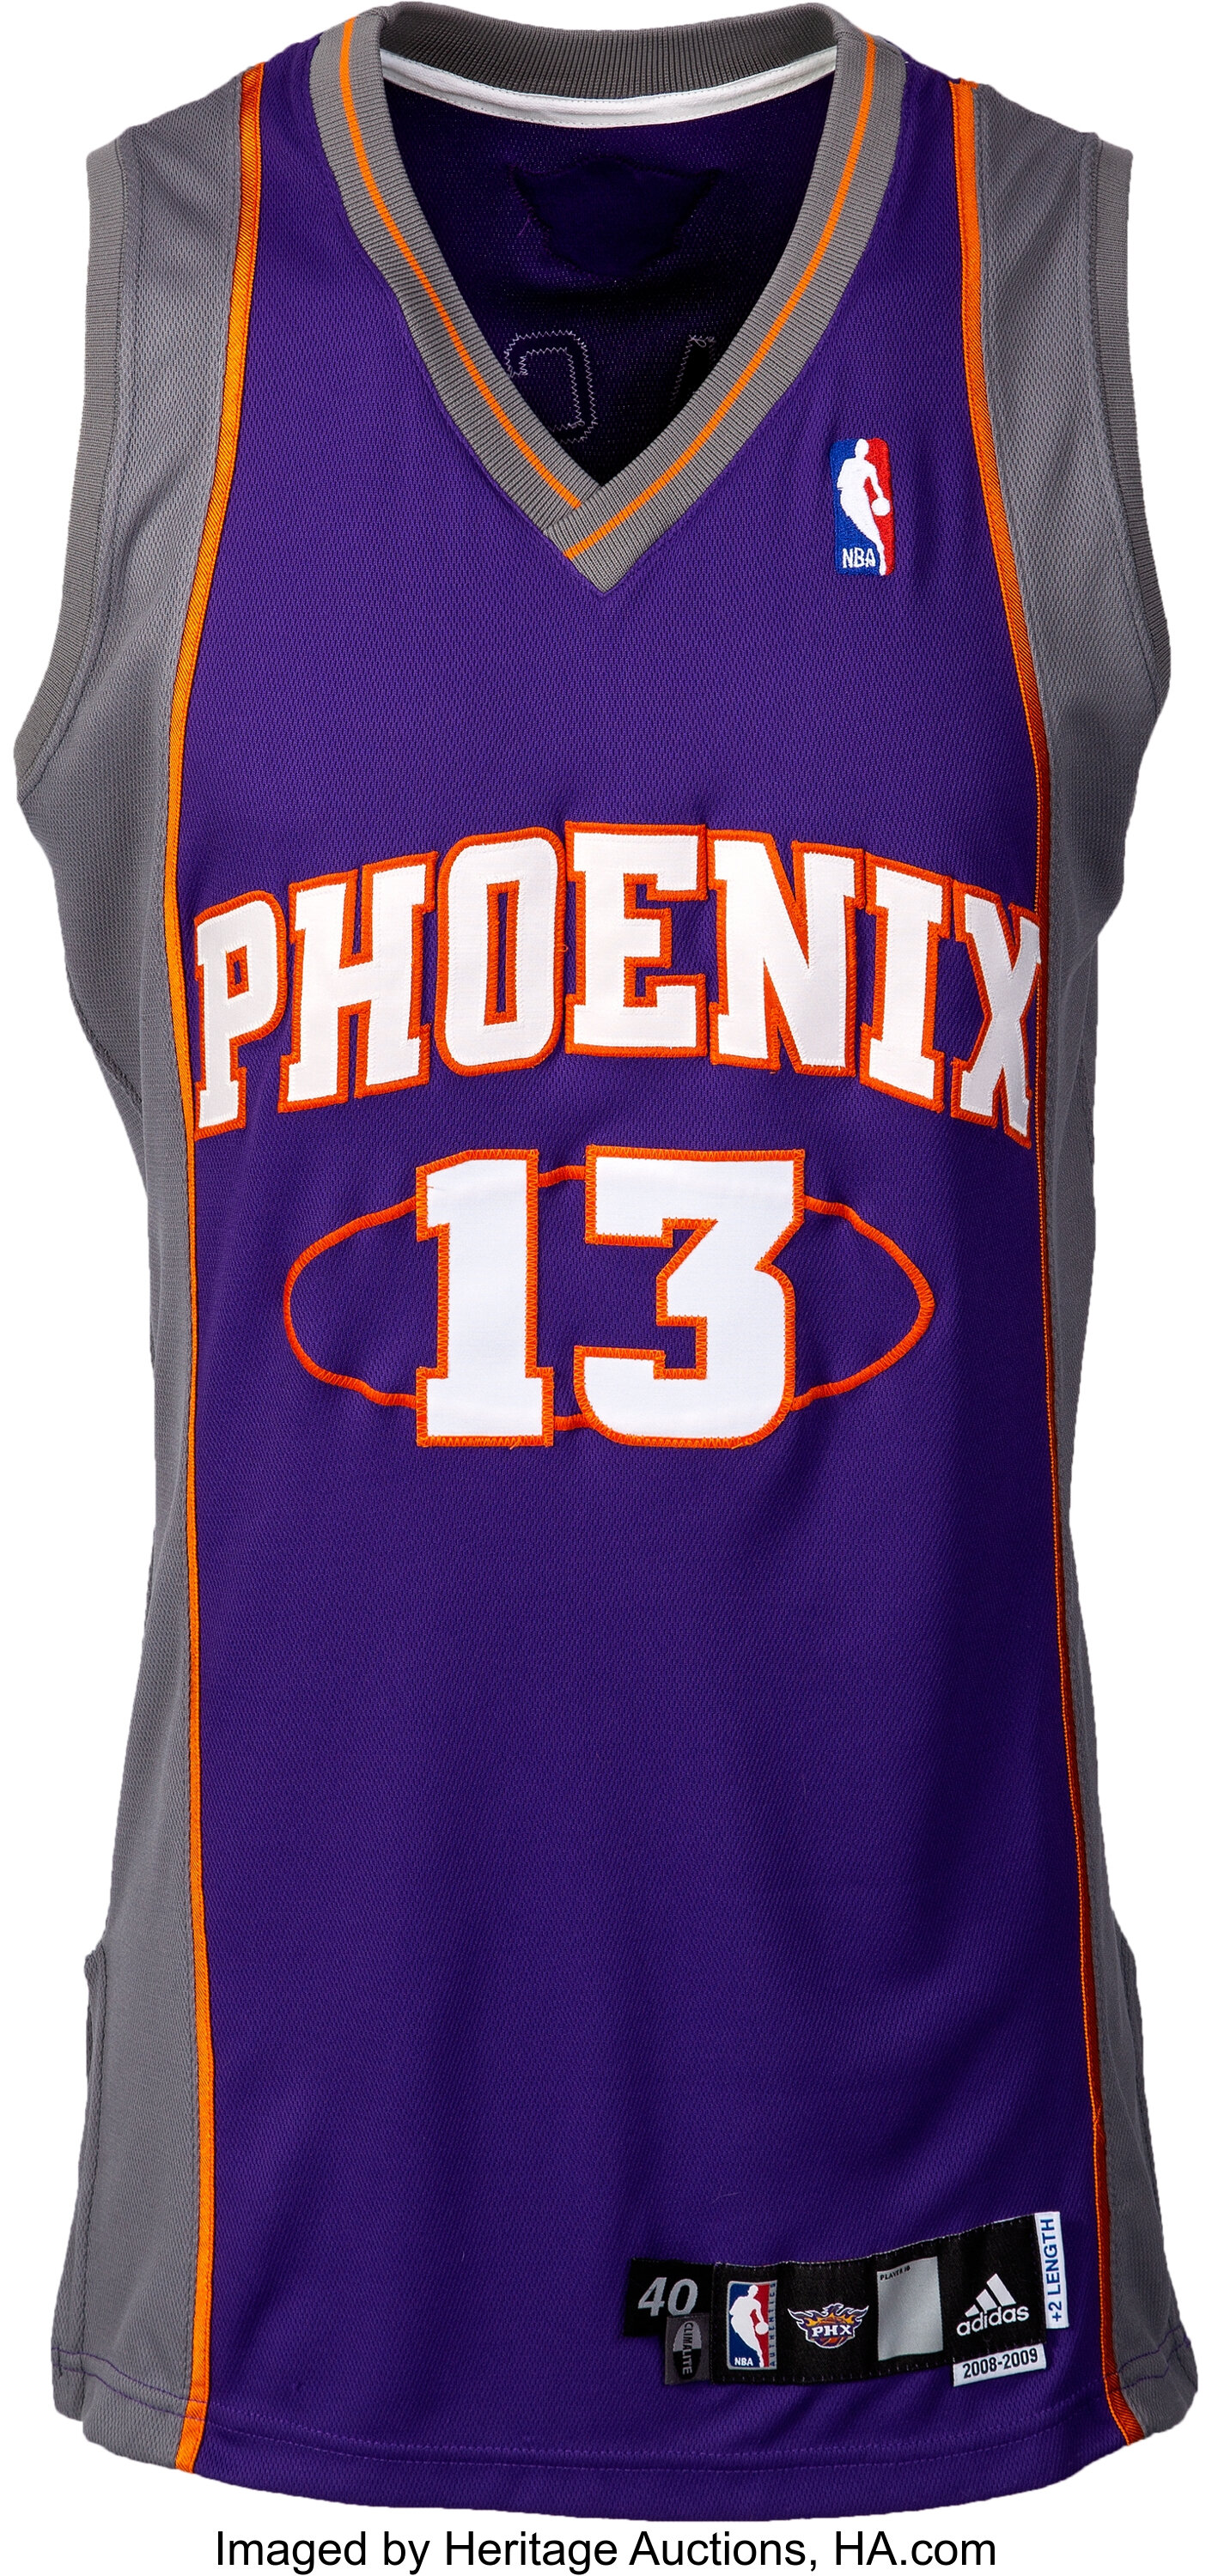 Phoenix Suns Game Used NBA Memorabilia for sale